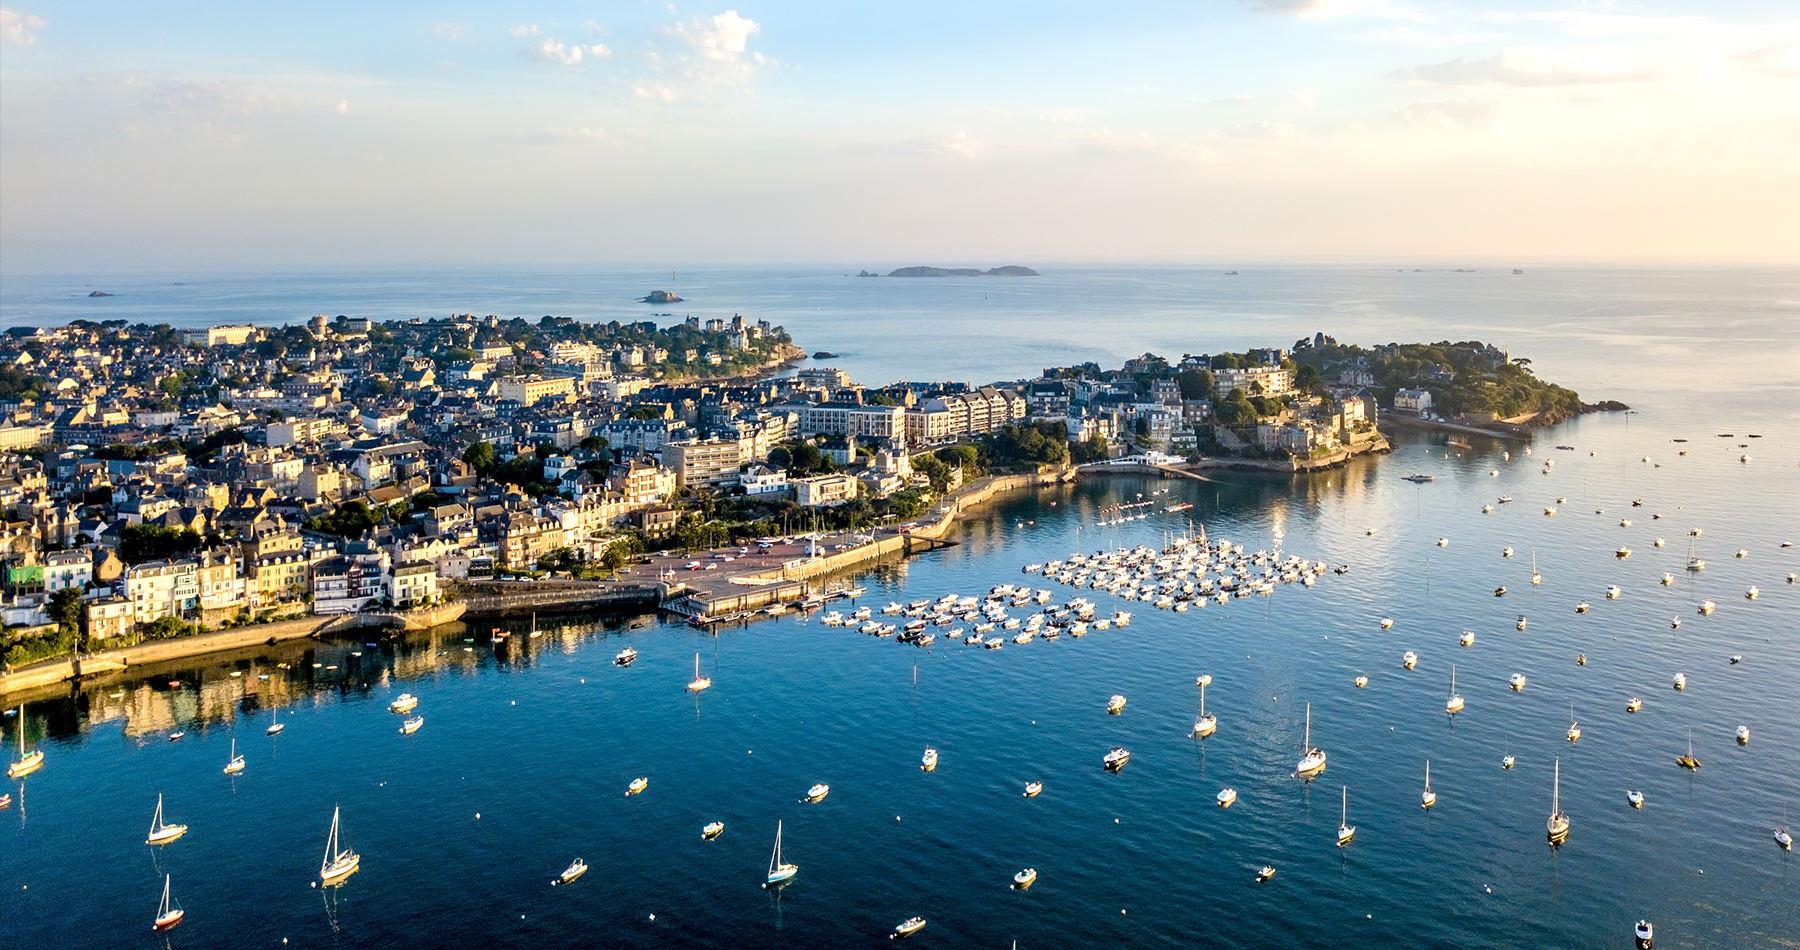 Cabinet Moraine Immobilier à Saint Malo - achat vente neuf prestige